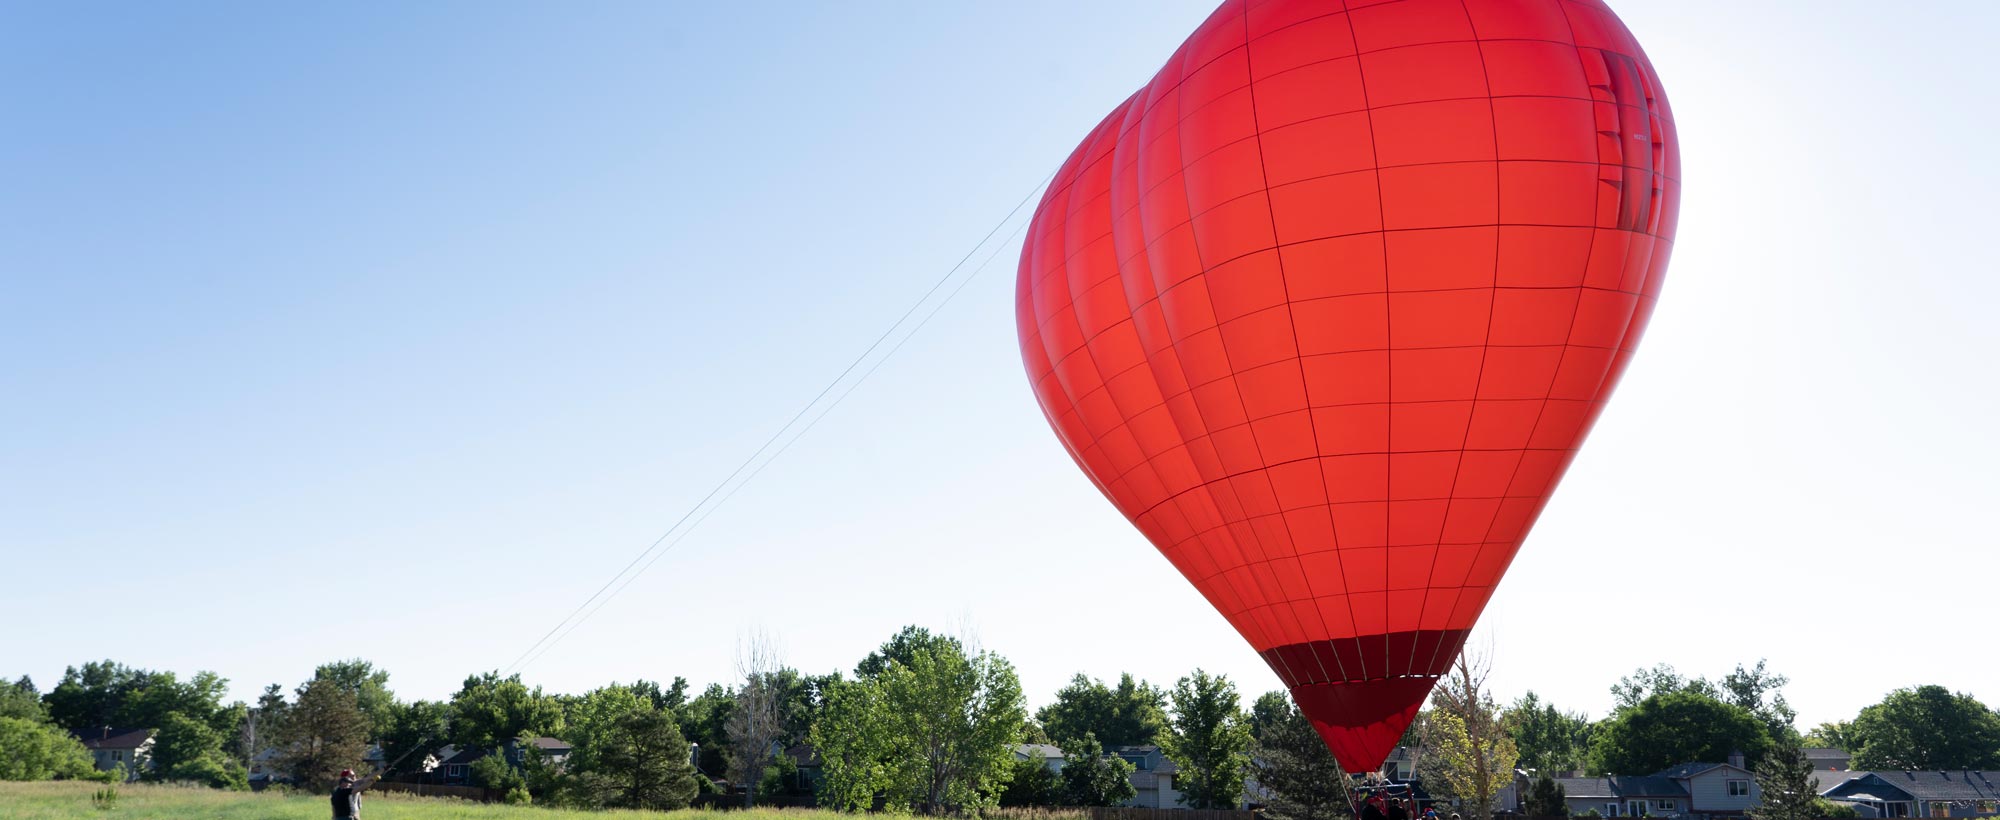 Image of a hot air balloon